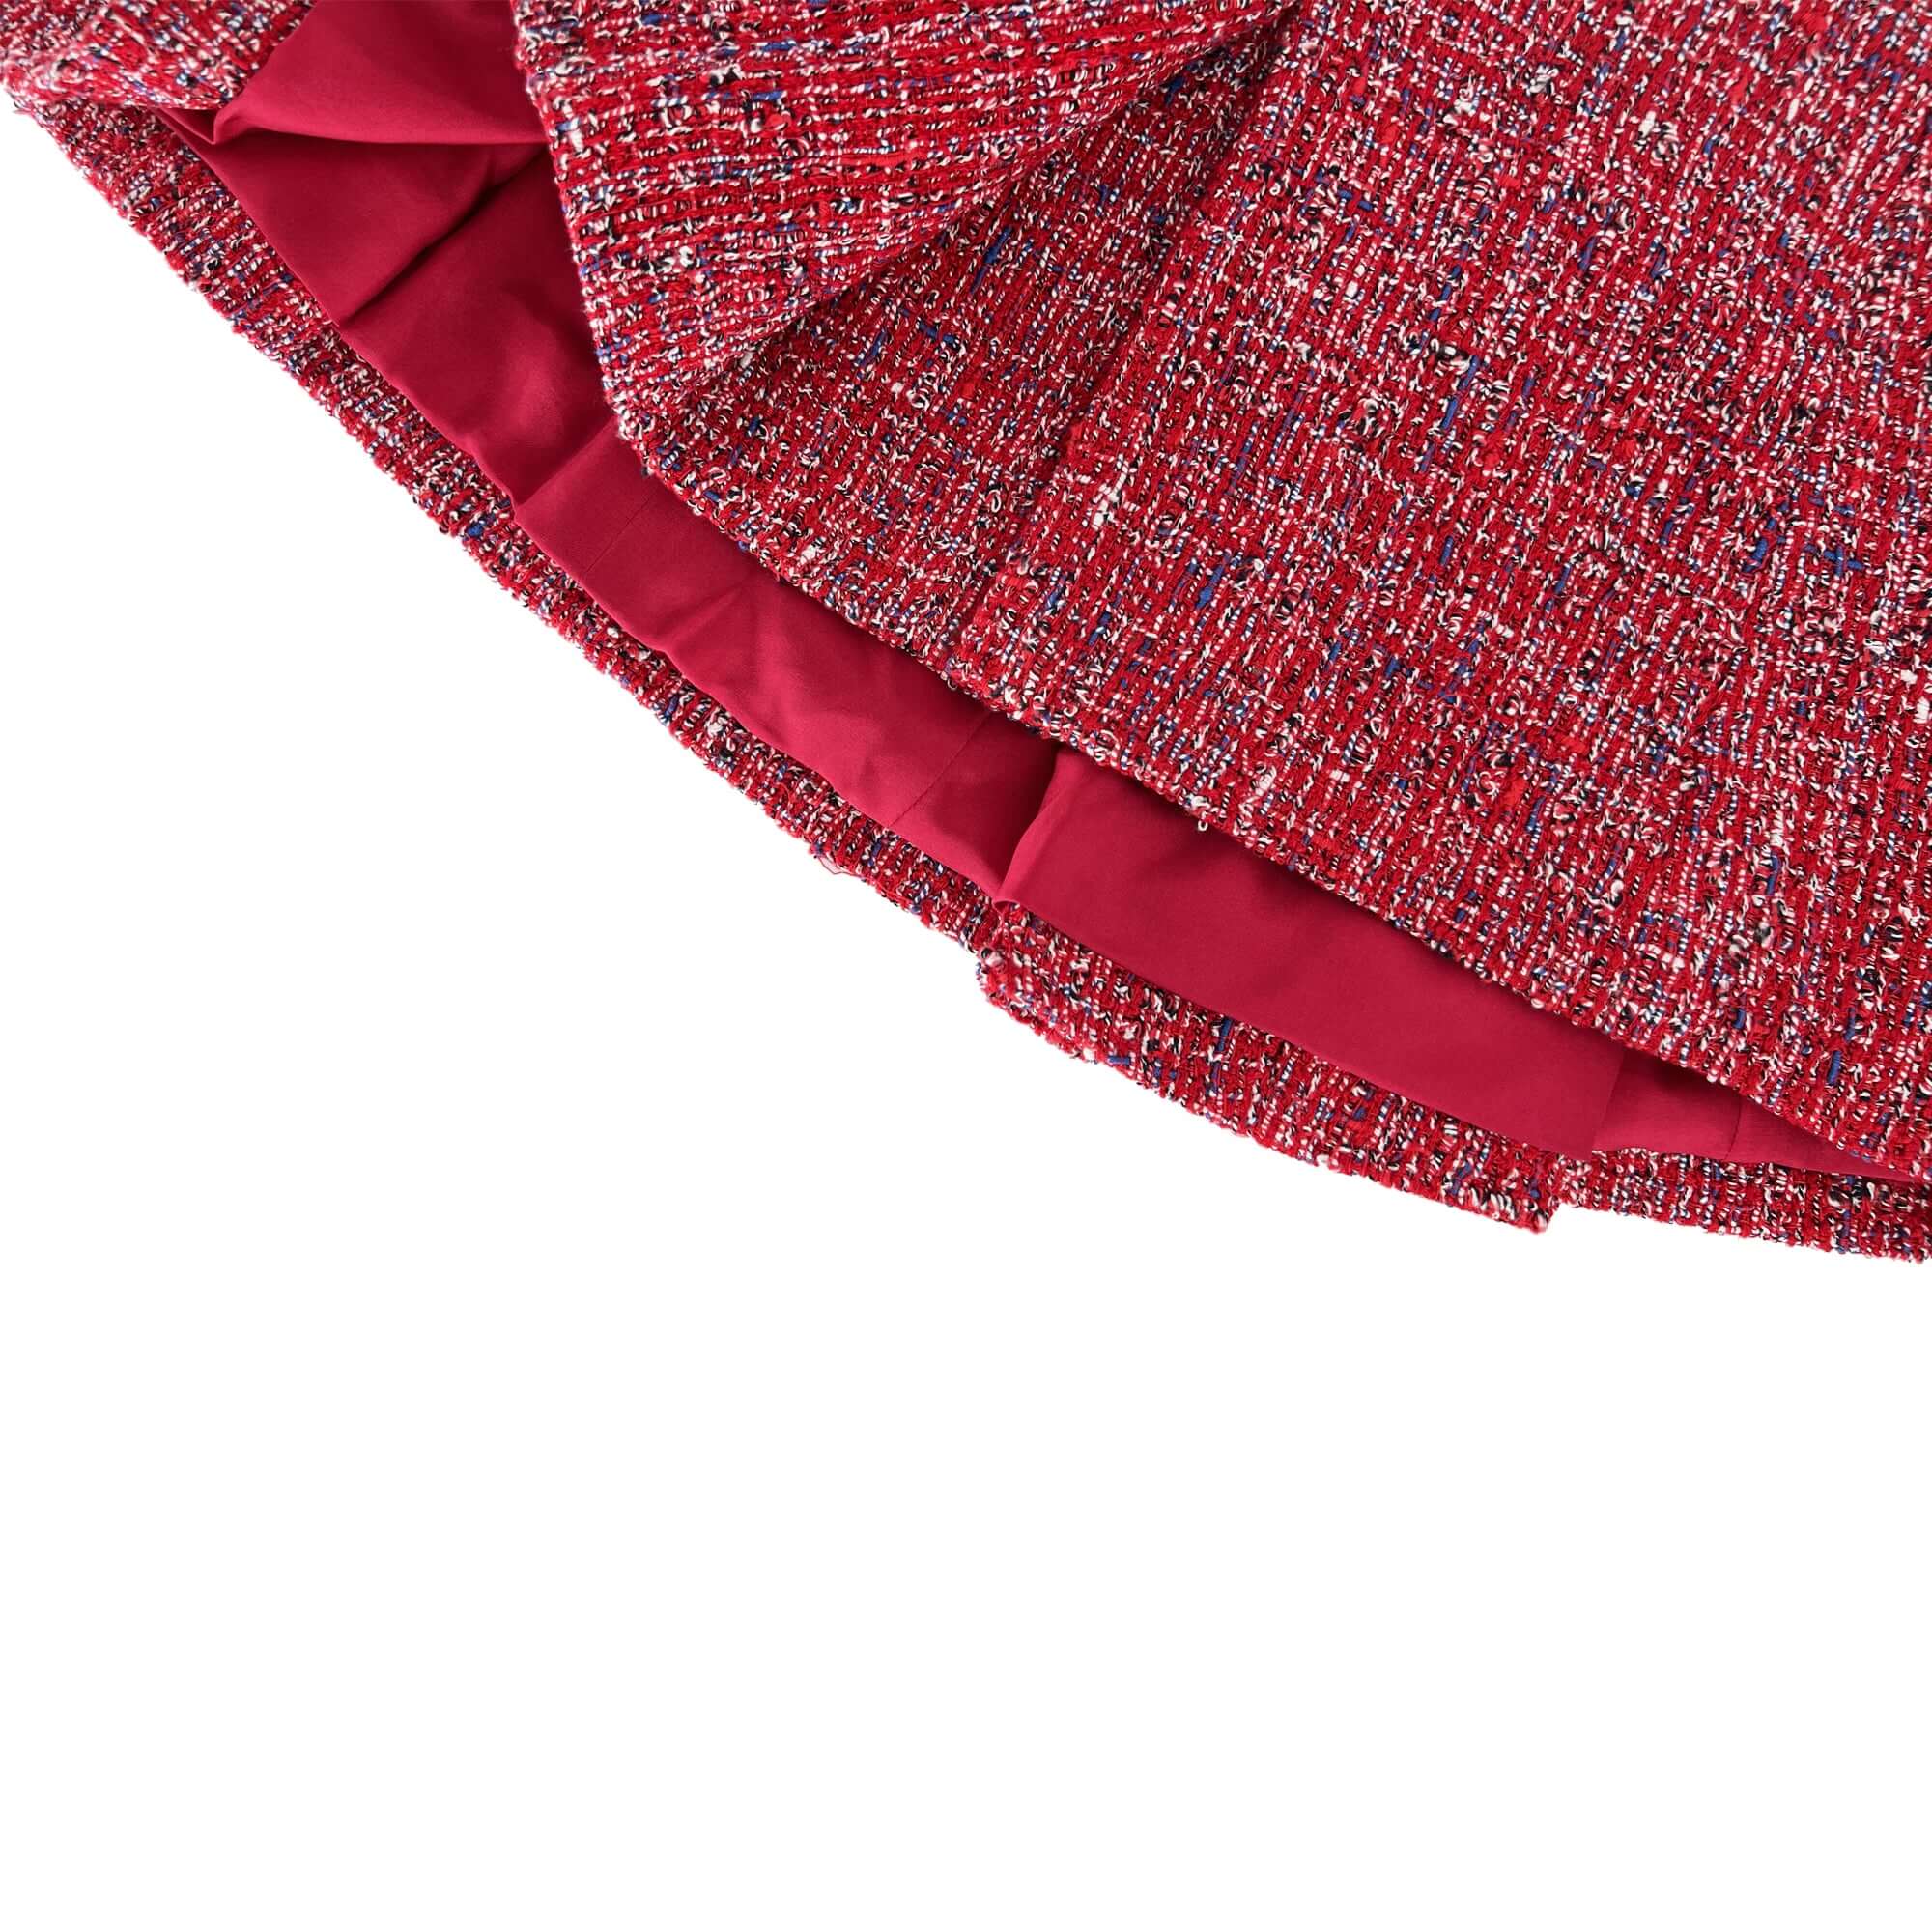 Chanel scarlet red tweed skirt